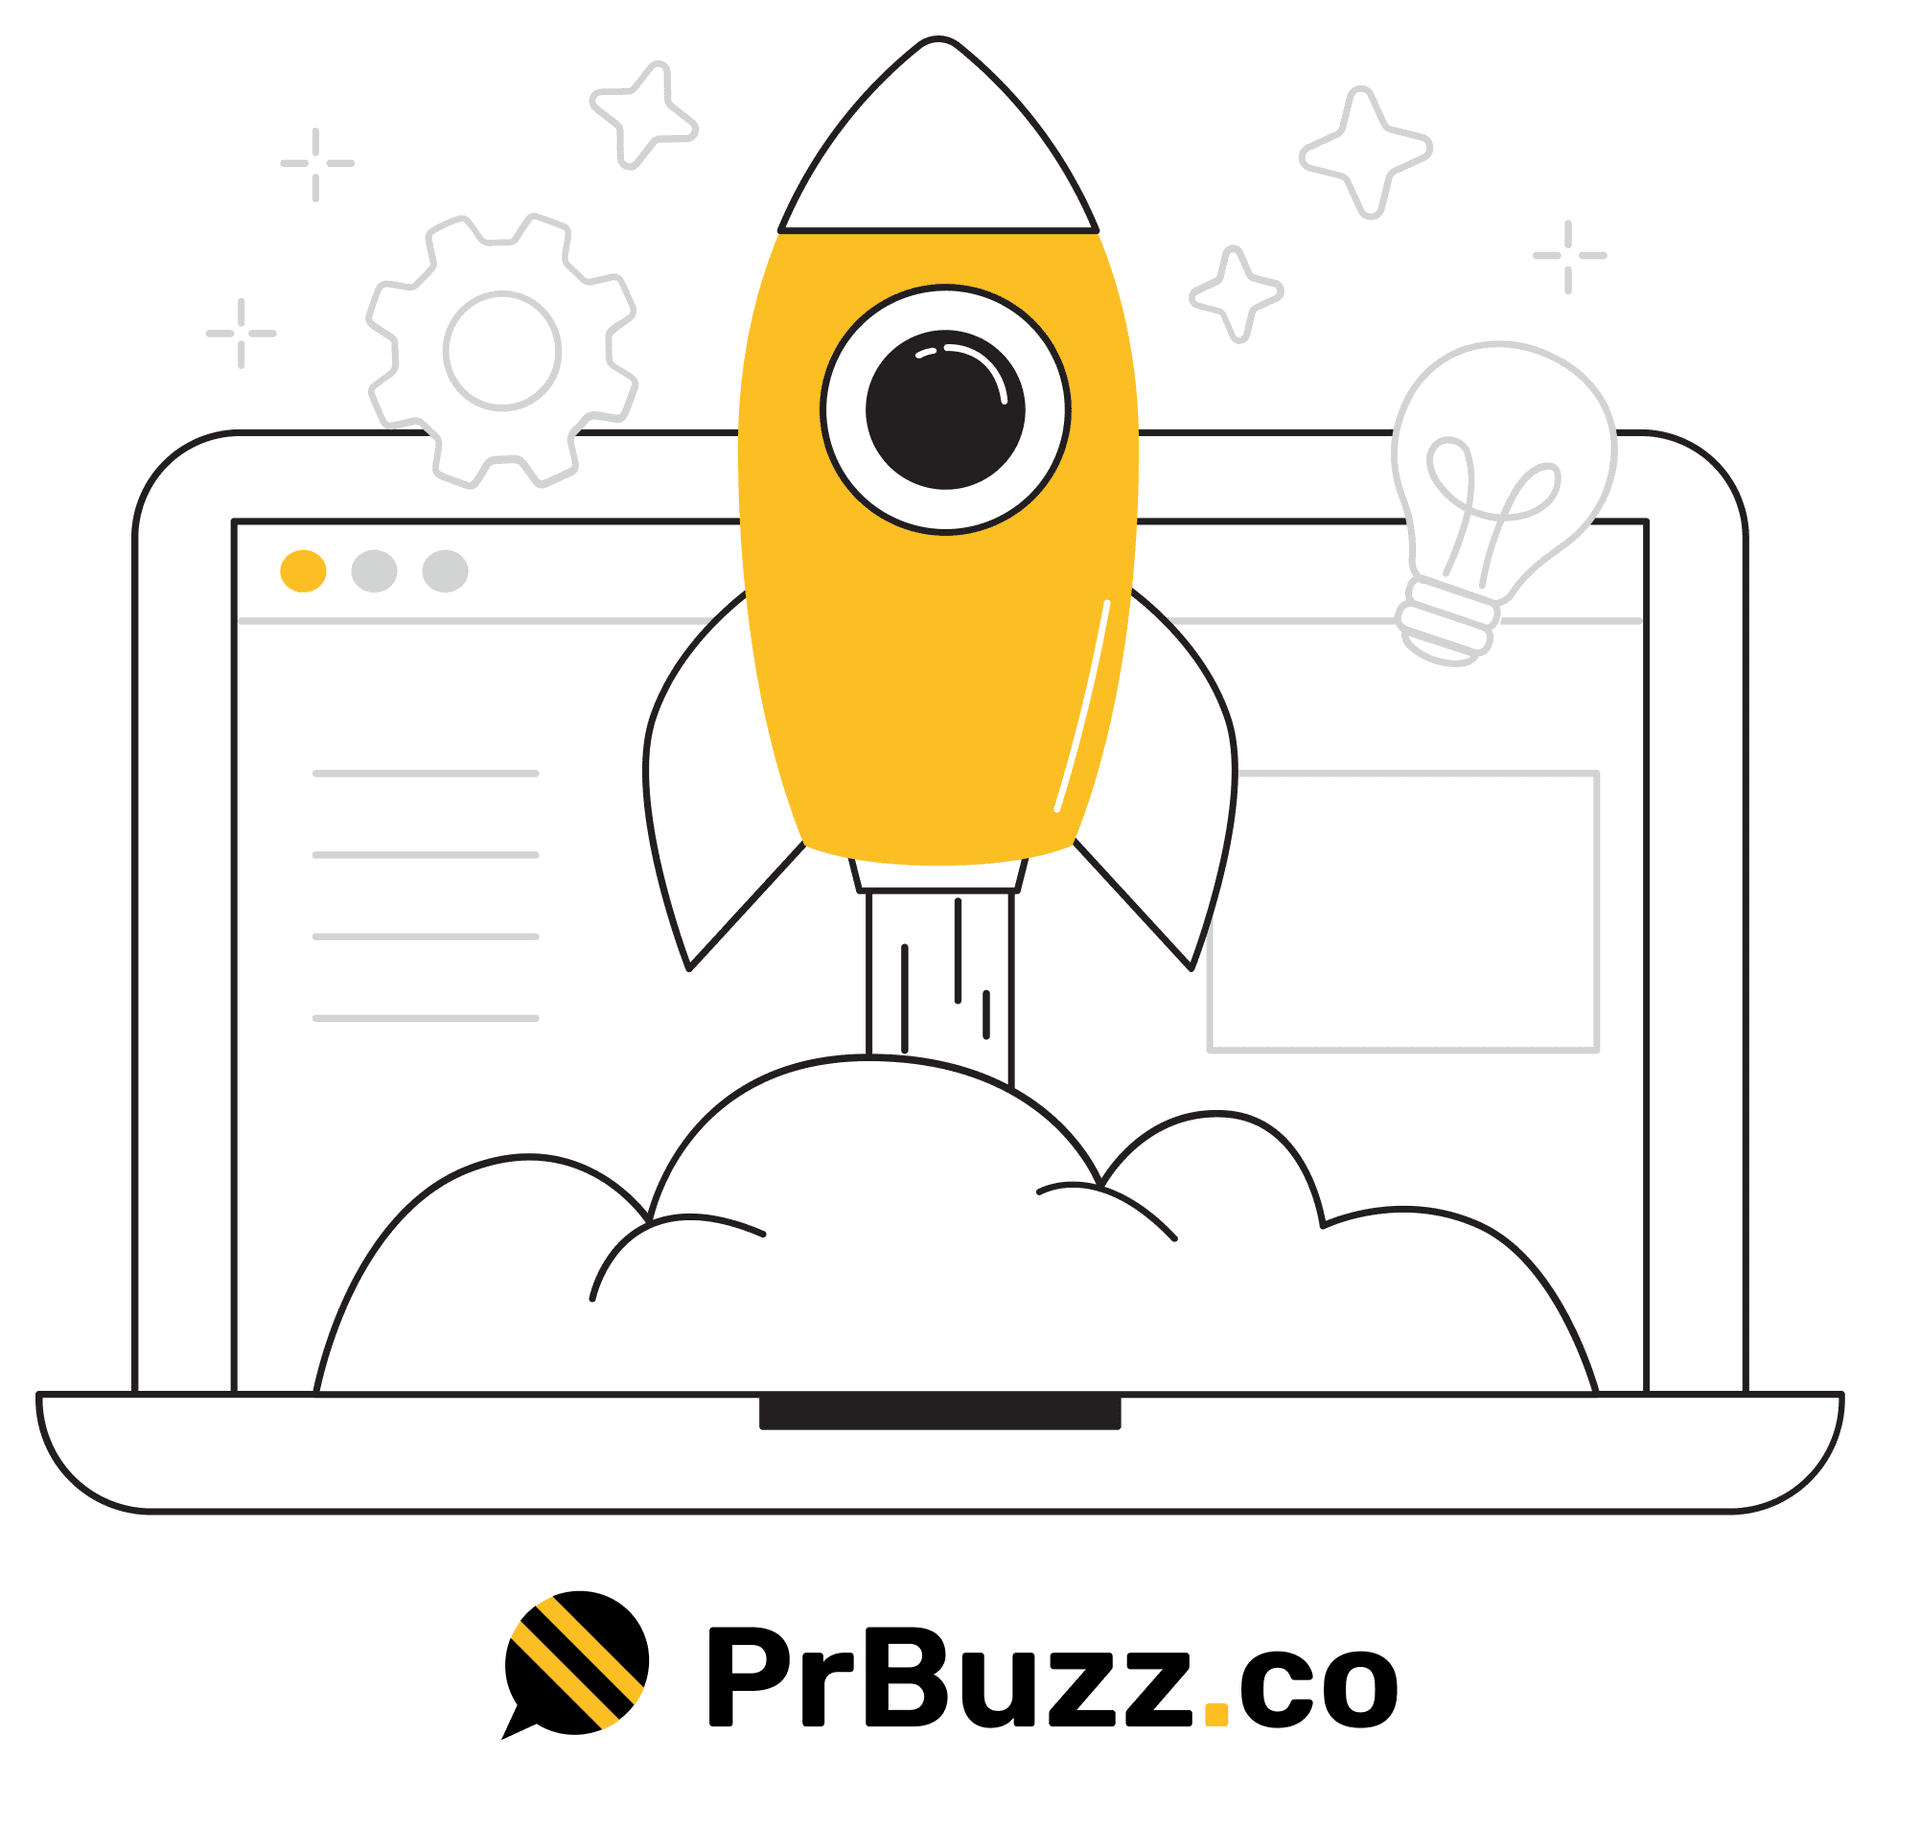 Cheap Press Release Distribution Drives PR Buzz's Mission for Cost-Effective PR Services